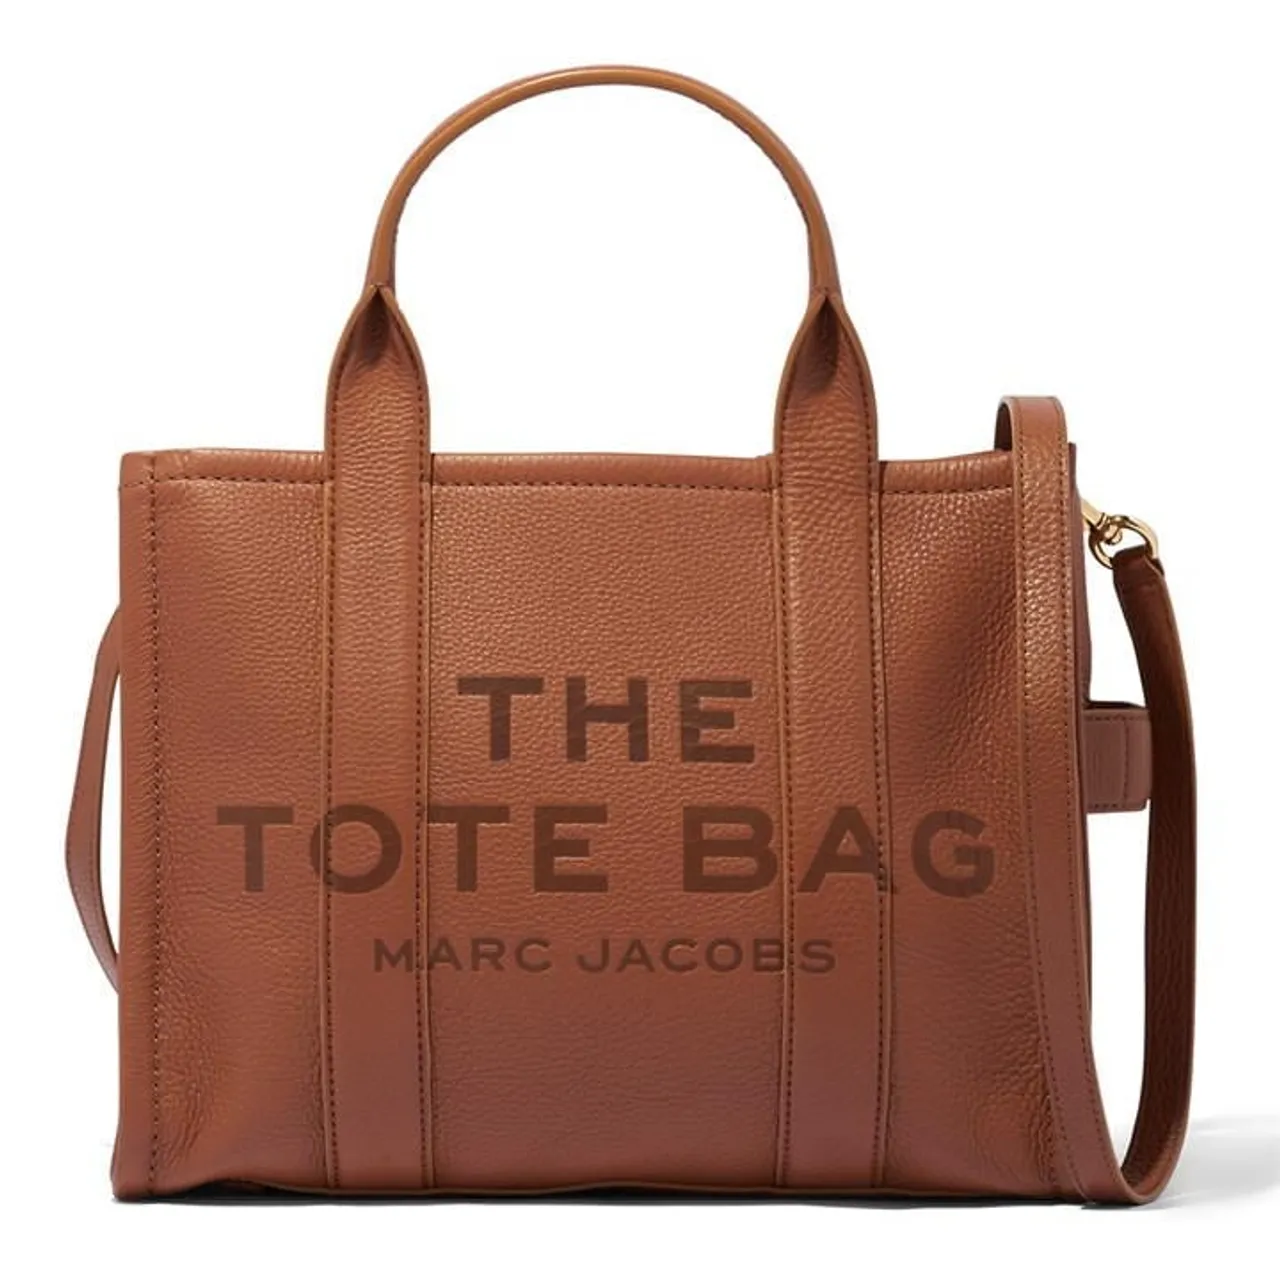 MARC JACOBS Medium Leather Tote Bag - Brown